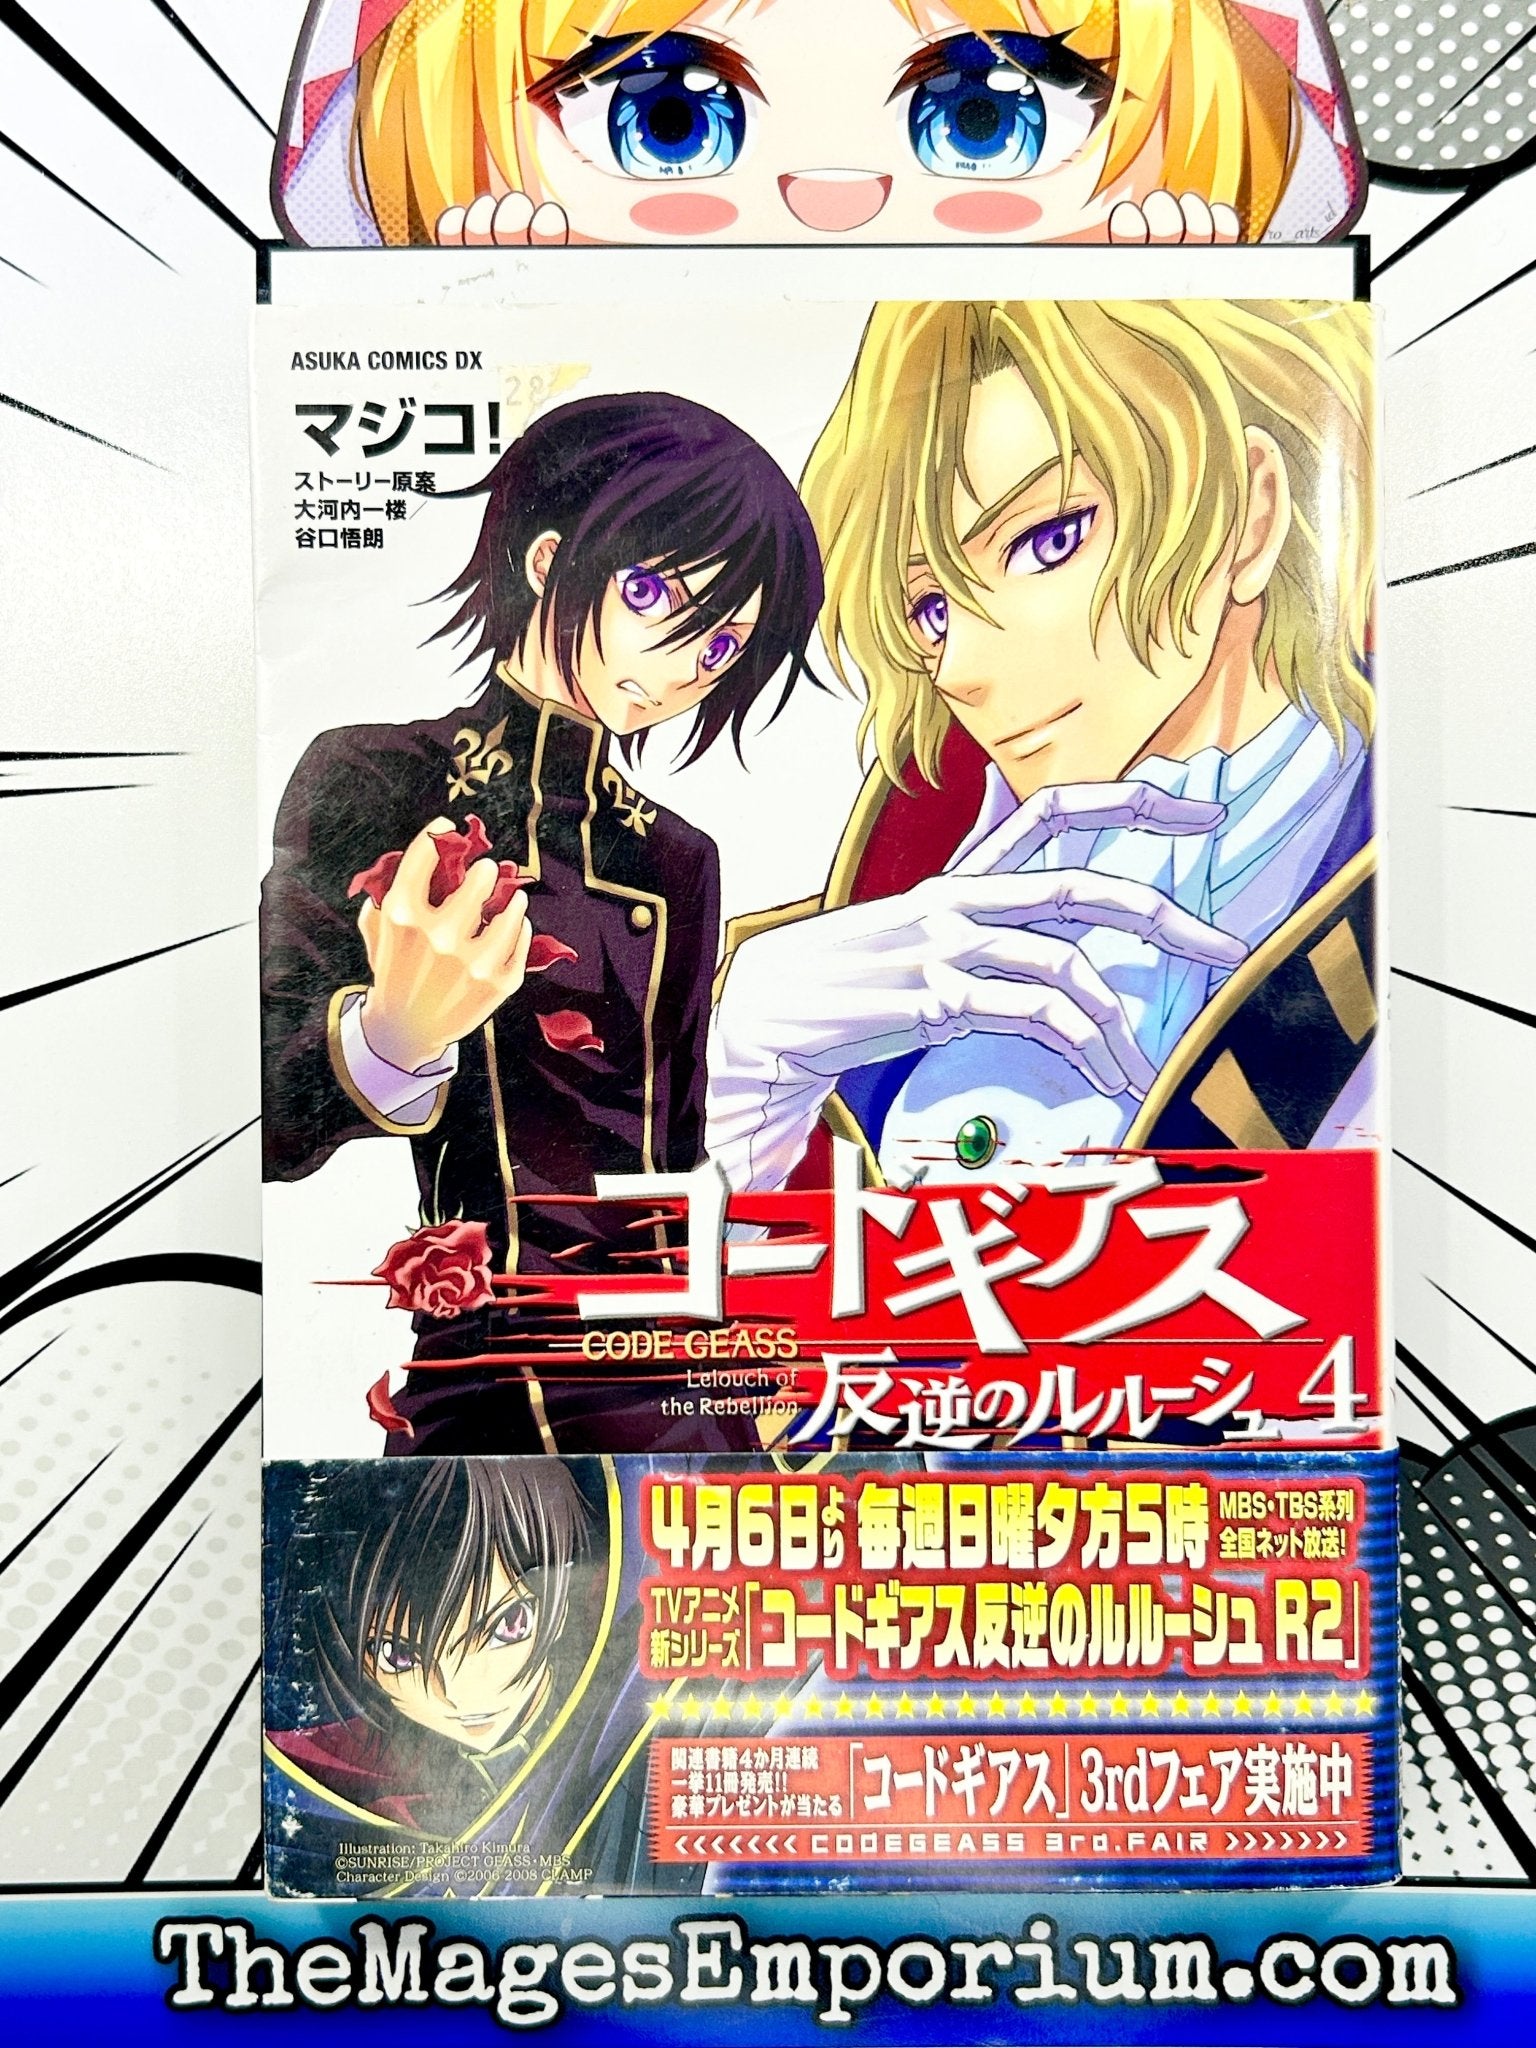 CODE GEASS Lelouch of The Rebellion Vol. 1 Japanese Language Anime Manga  Comic